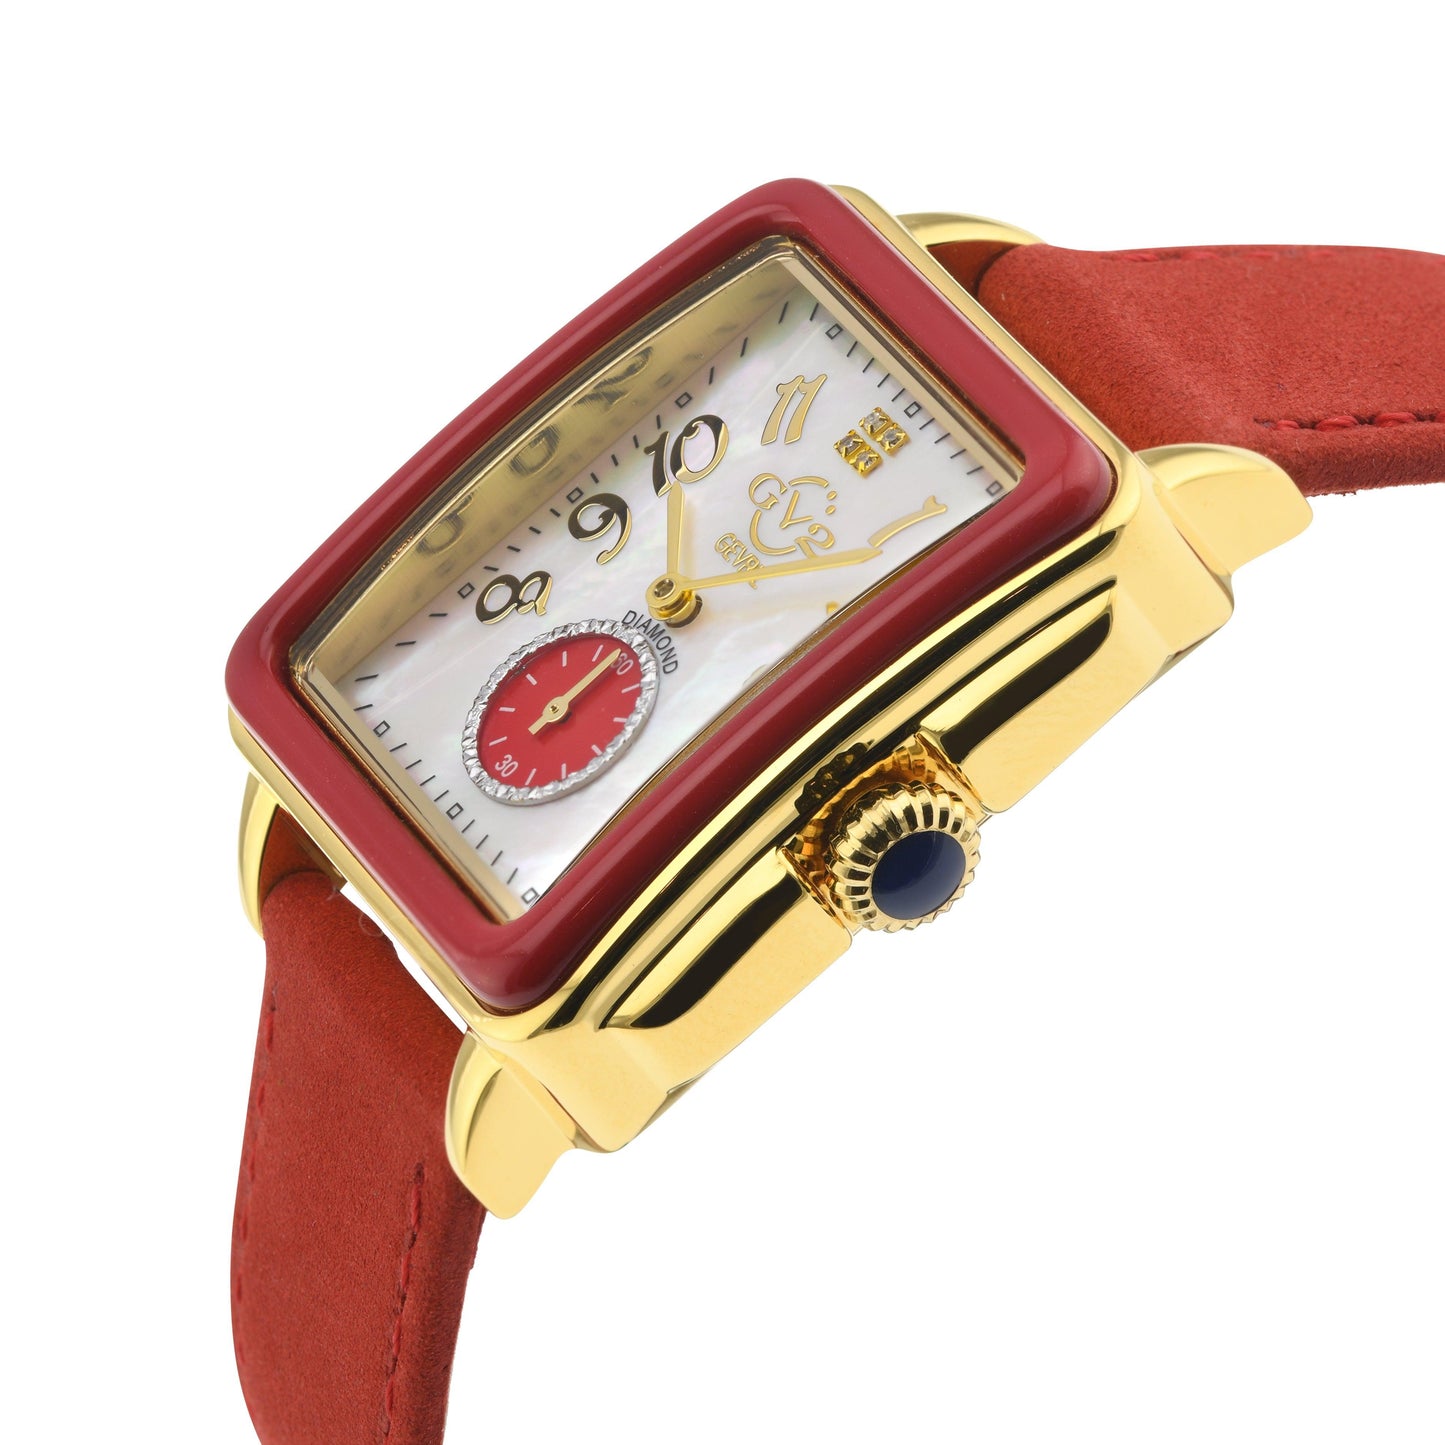 Gevril-Luxury-Swiss-Watches-GV2 Bari Enamel-9261